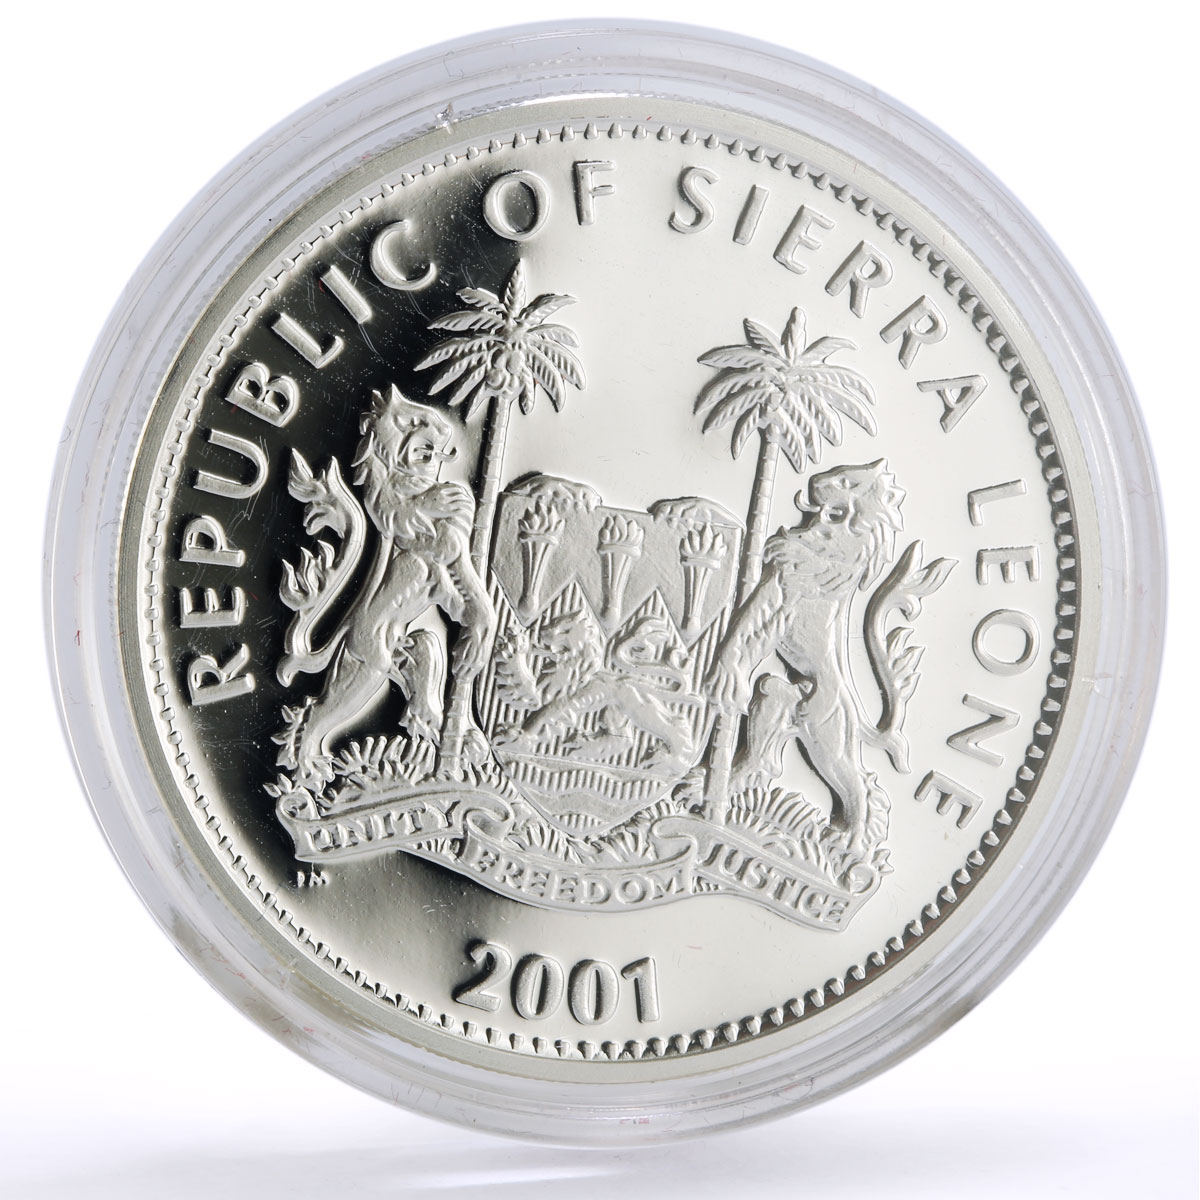 Sierra Leone 10 dollars Lunar Calendar Year of the Snake proof silver coin 2001